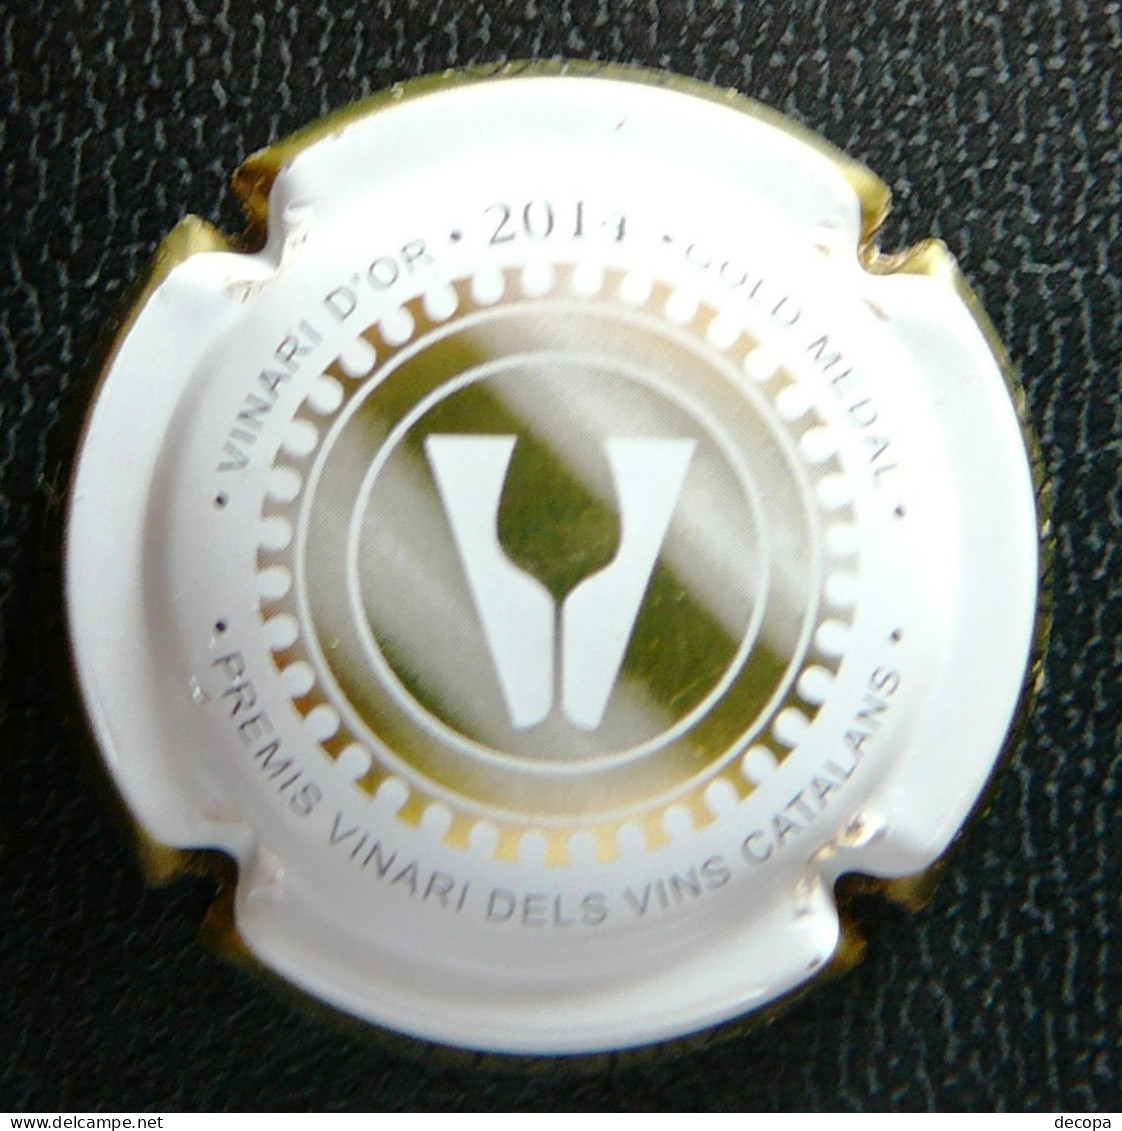 (dc-057) Capsule Cava Pere Olivella Galimany - Gold Medal 2014   -  Placa Premis Vinari Dels Vins Catalans - Spumanti